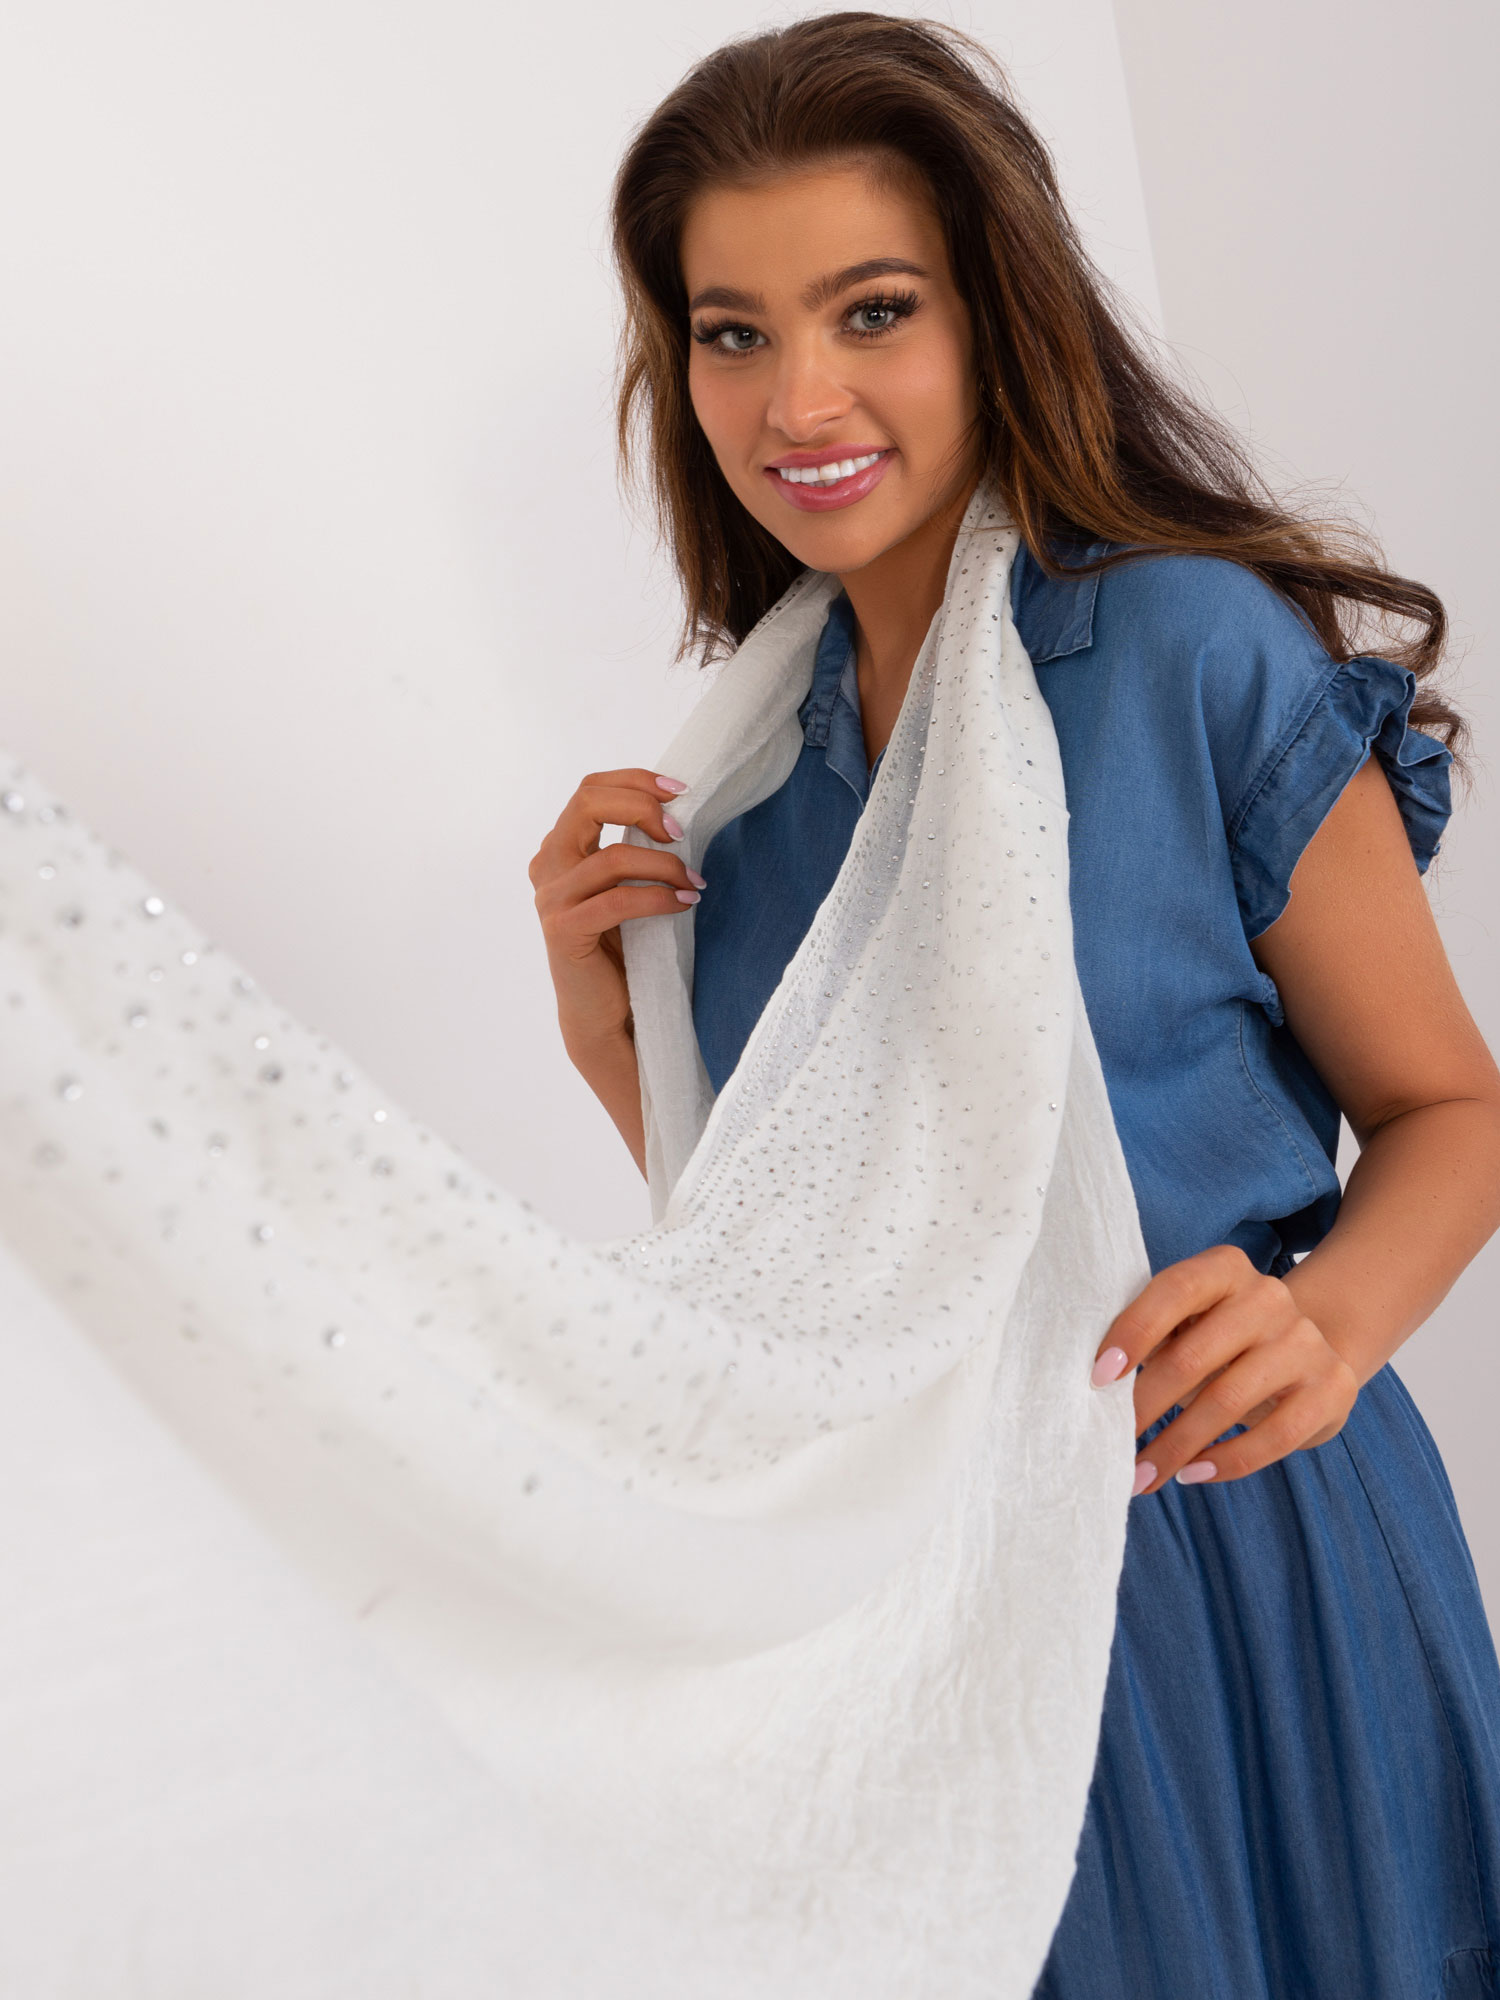 White scarf with rhinestones